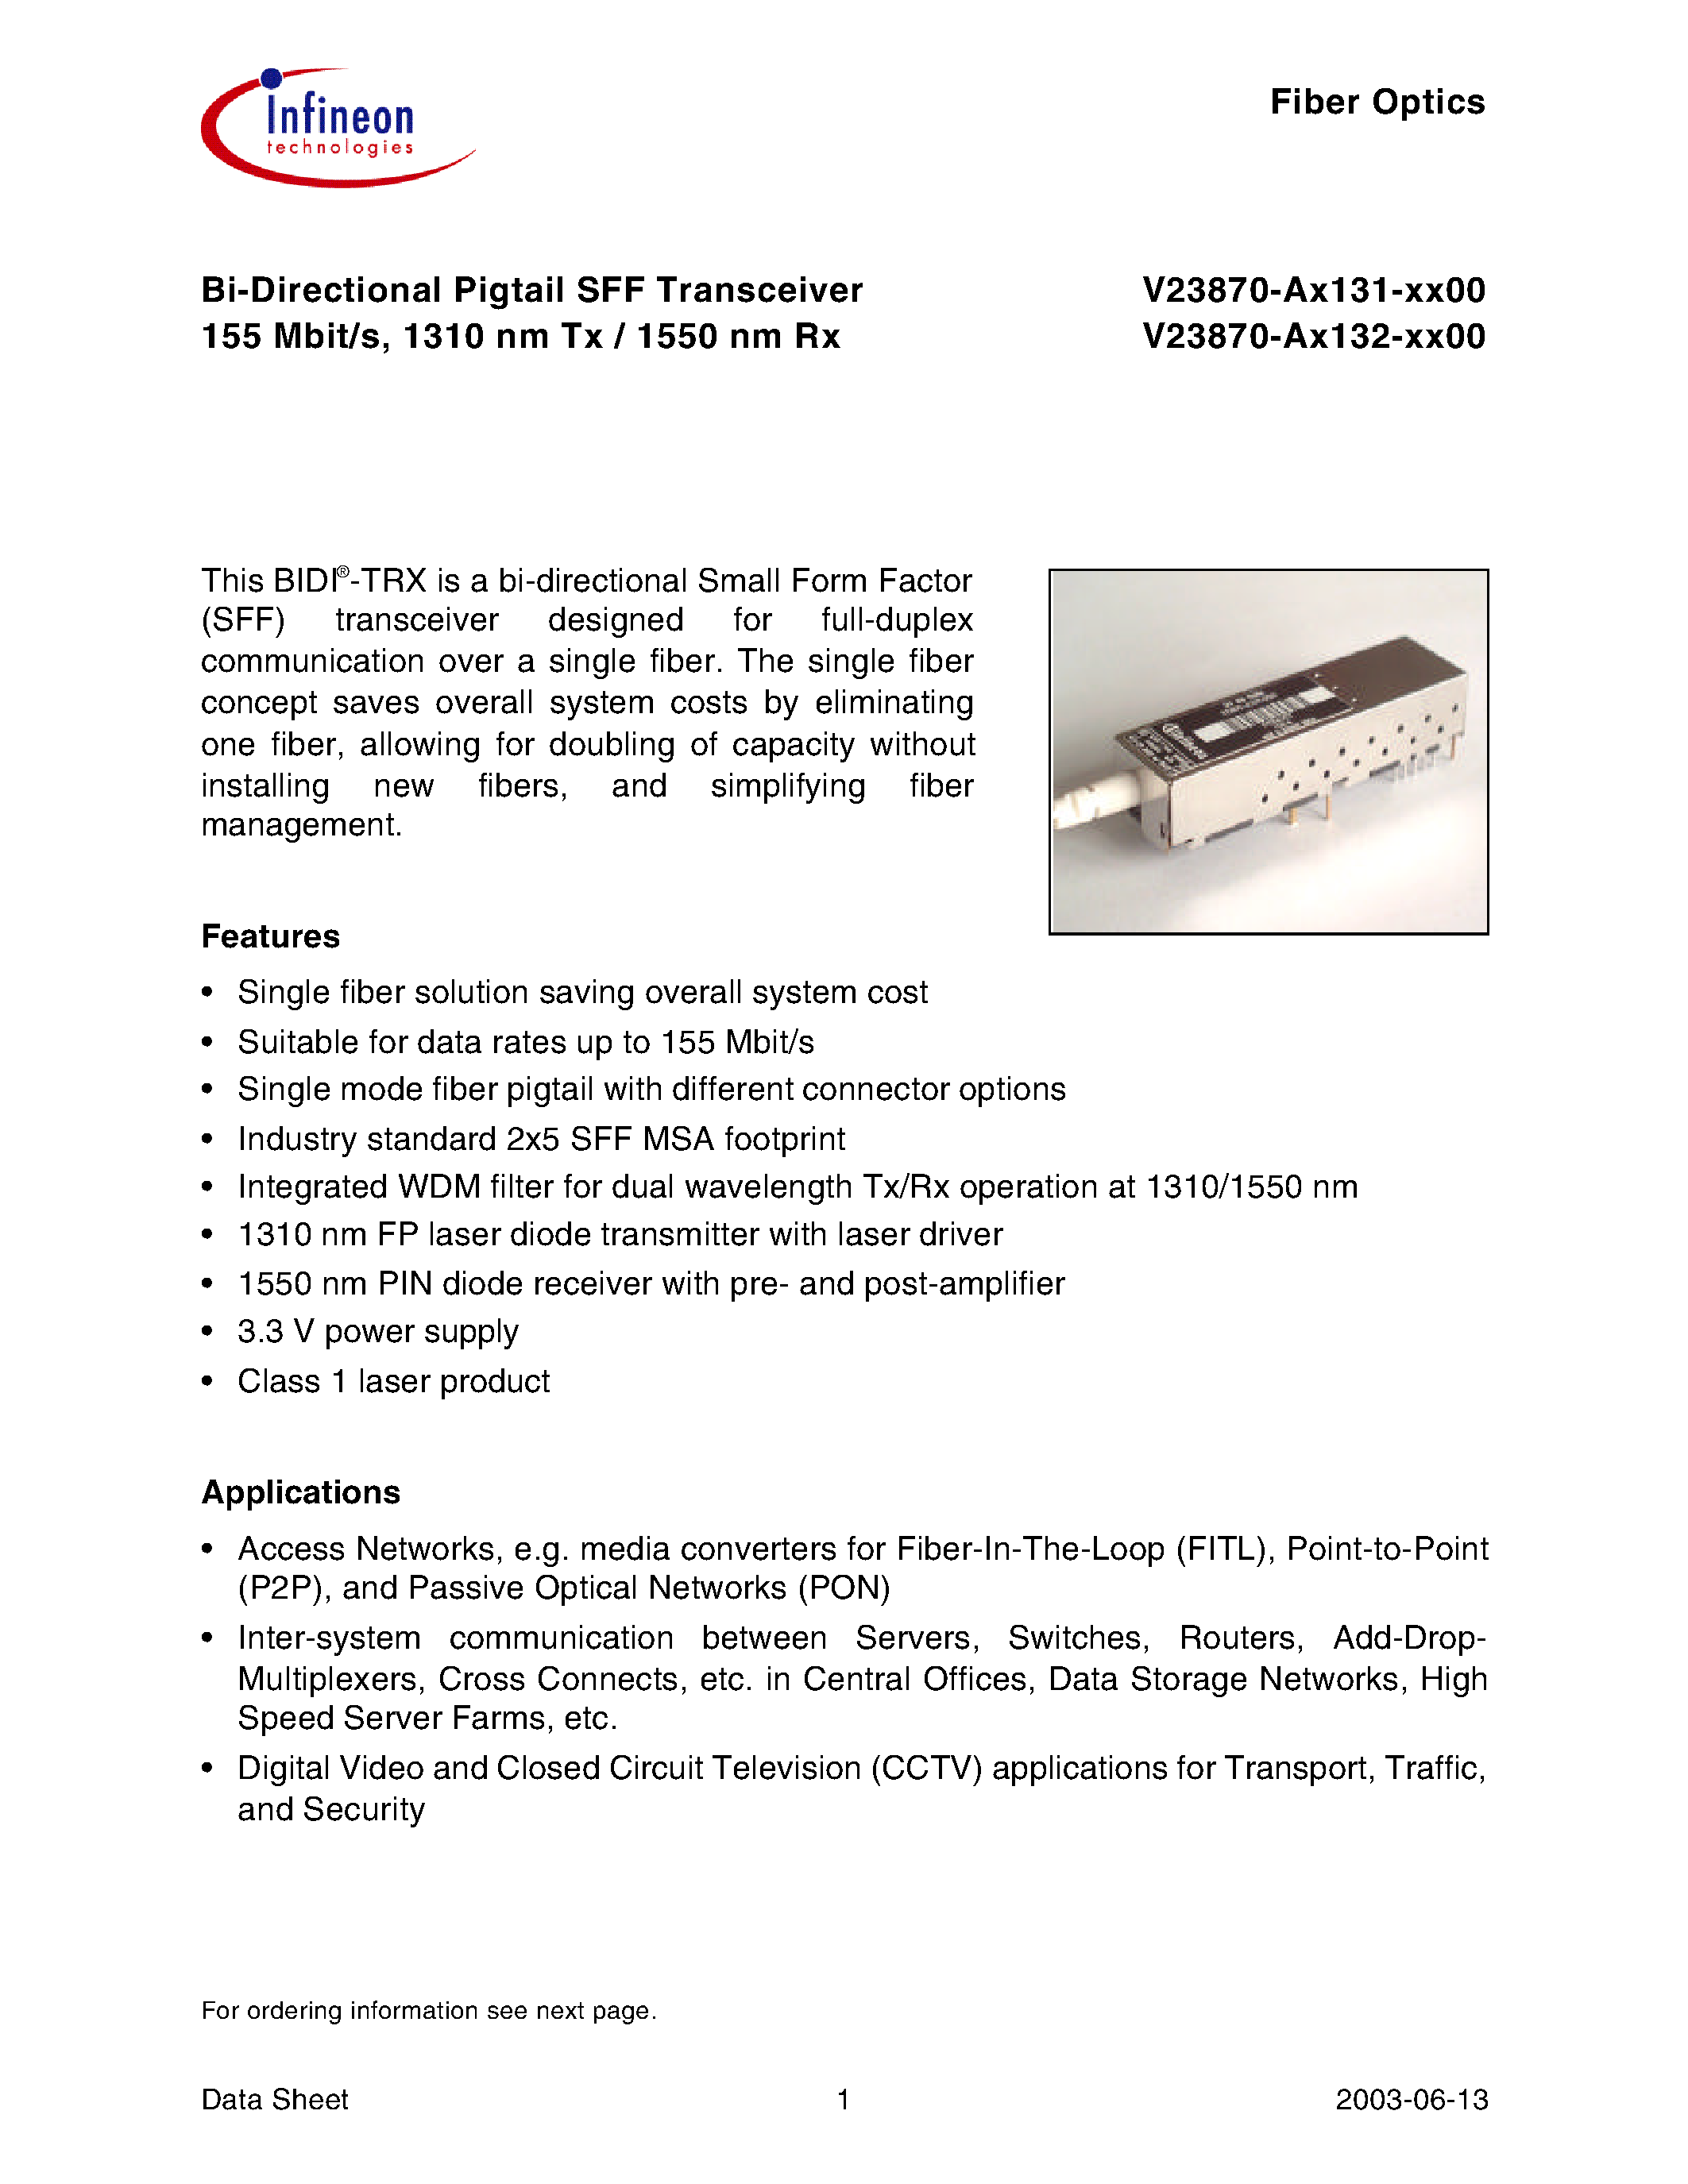 Даташит V23870-A3132-B500 - Bi-Directional Pigtail SFF Transceiver 155 Mbit/s/ 1310 nm Tx / 1550 nm Rx страница 1